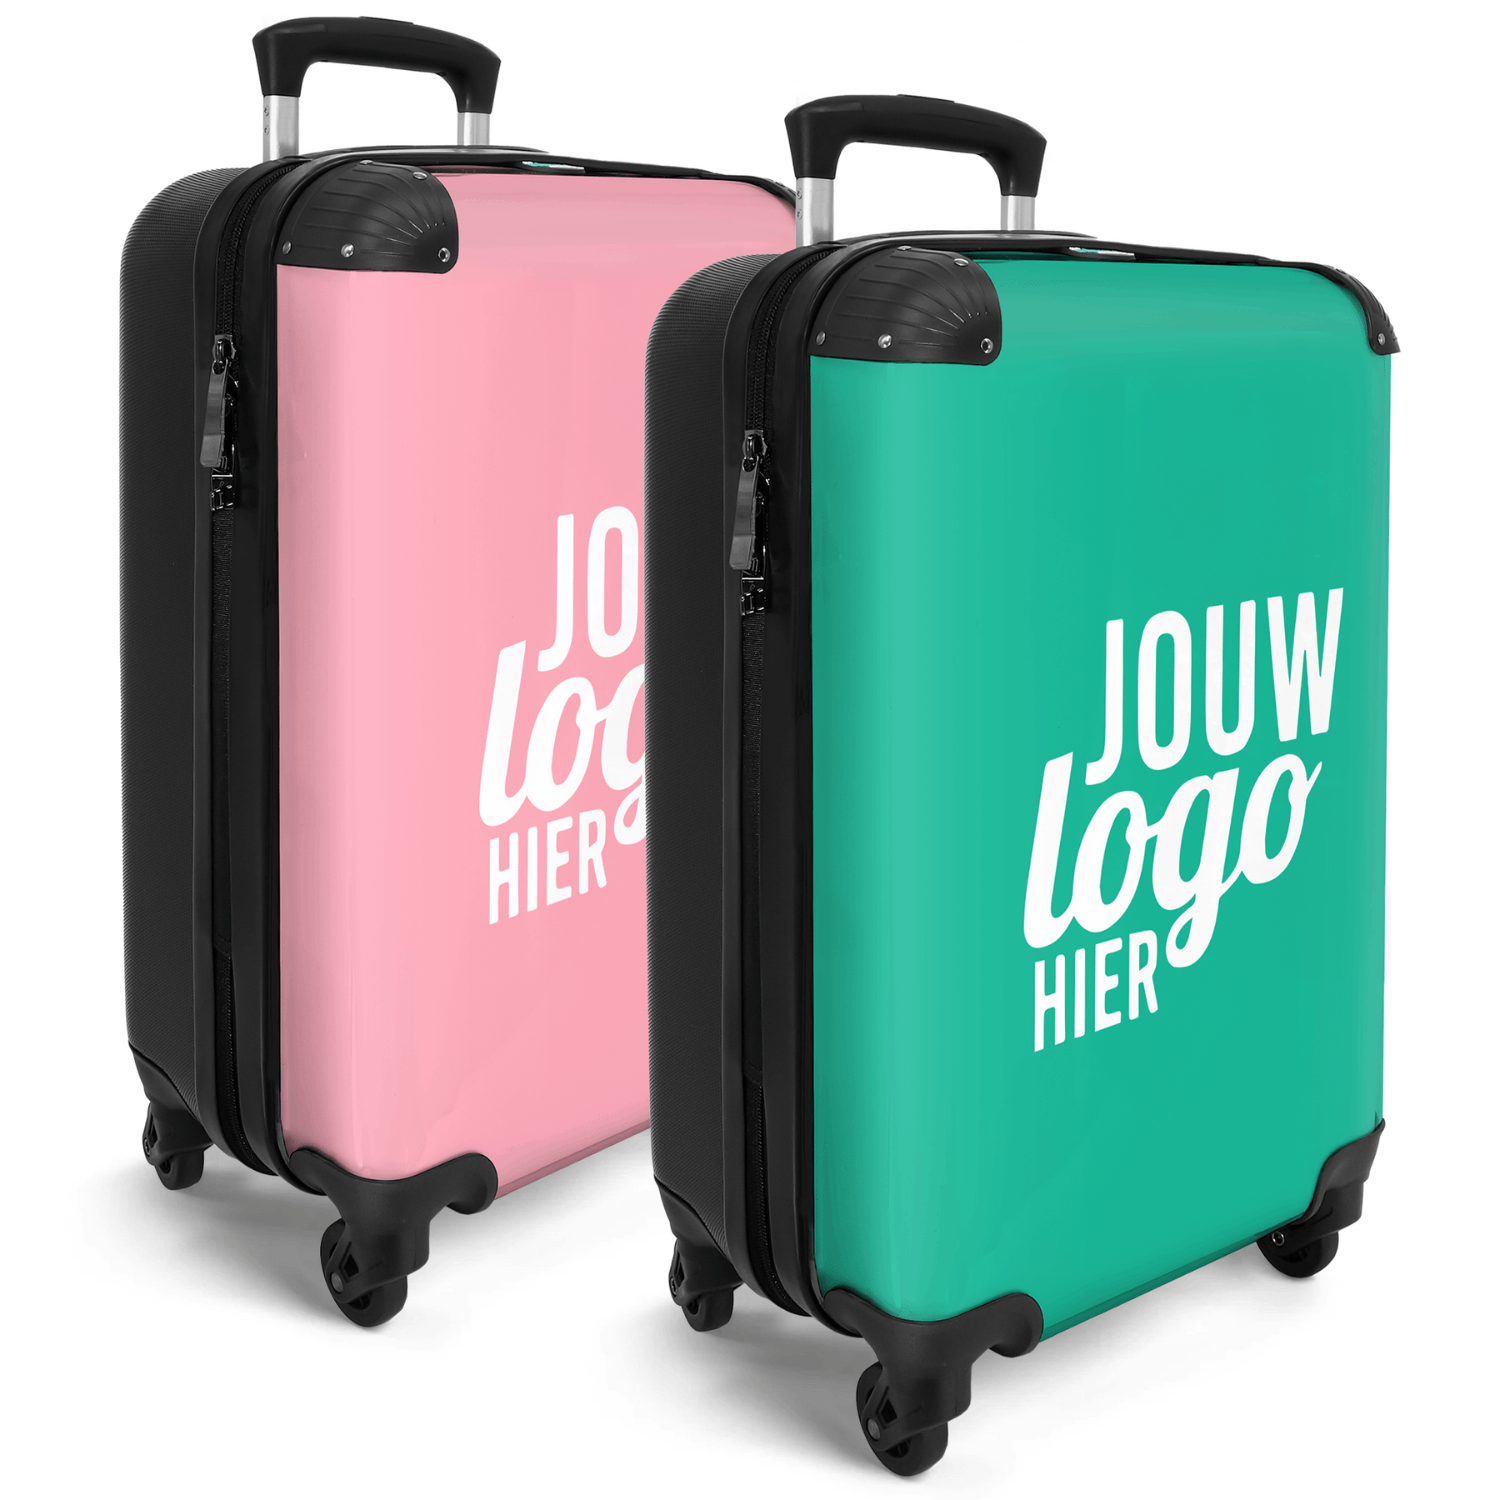 Koffer met logo